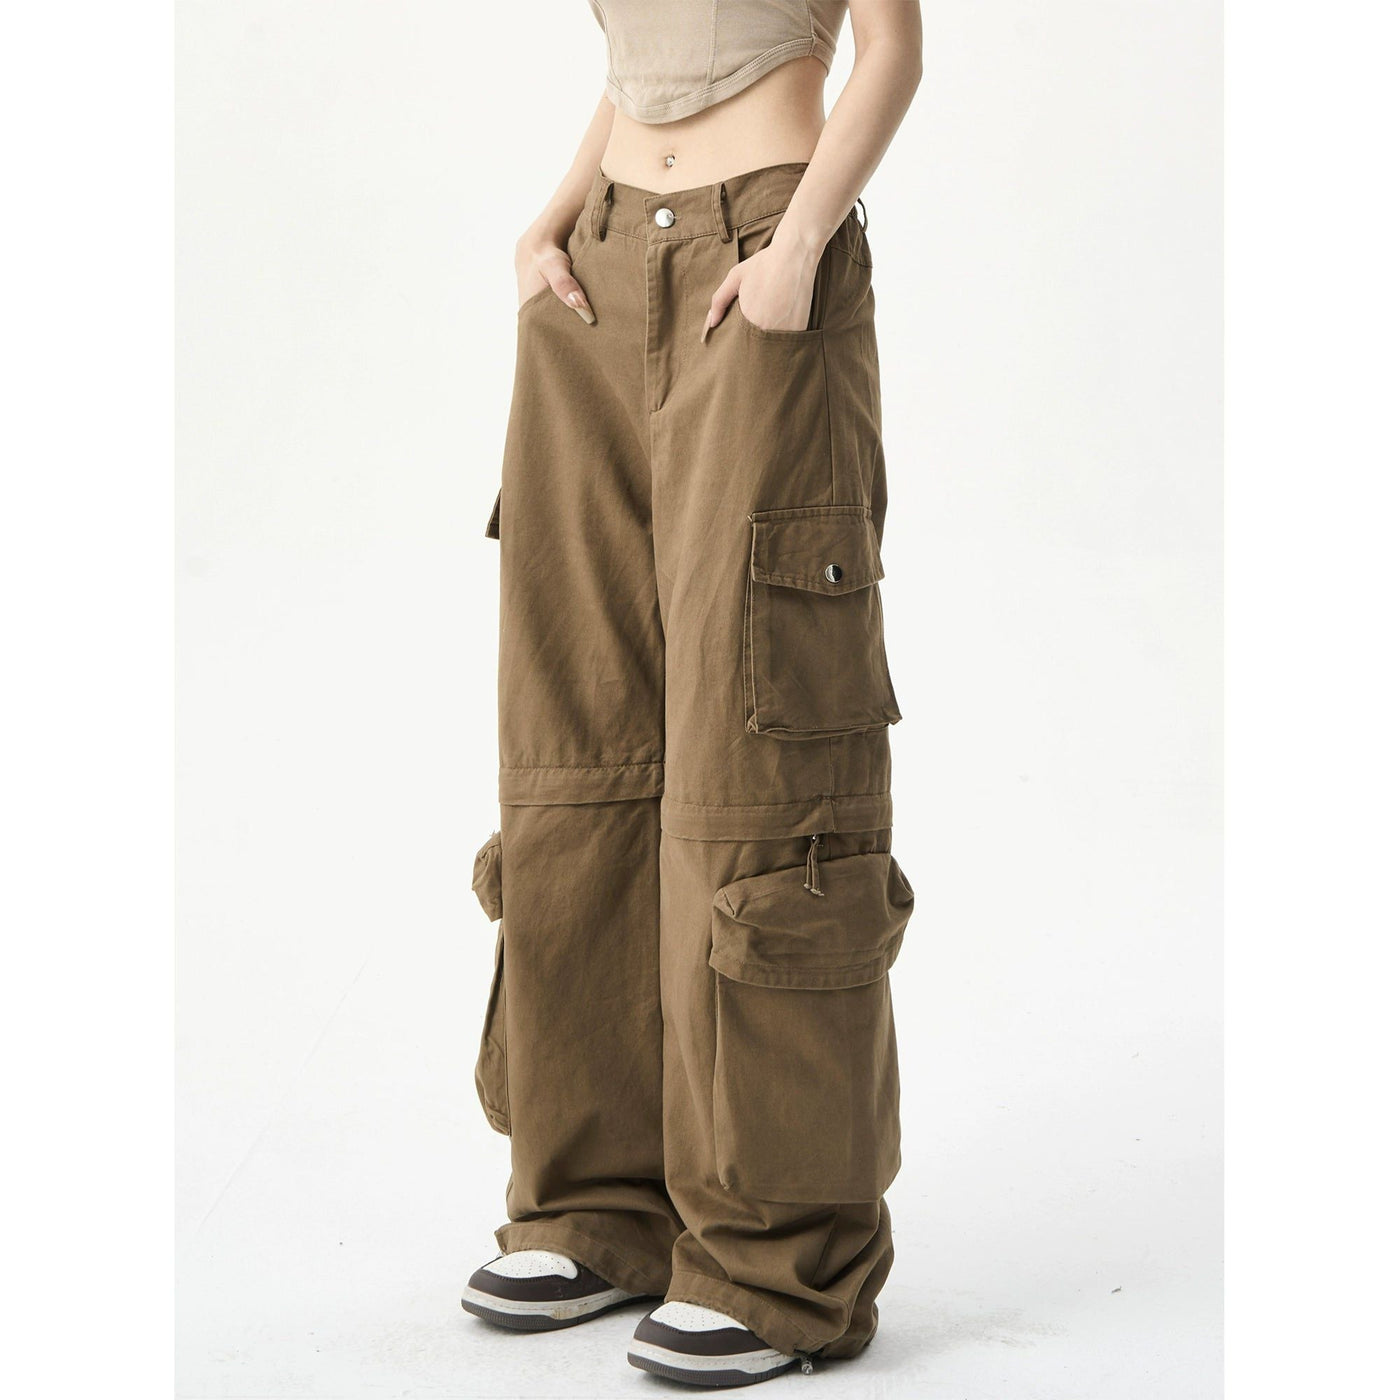 Detachable Zipped Cargo Pants Korean Street Fashion Pants By MaxDstr Shop Online at OH Vault